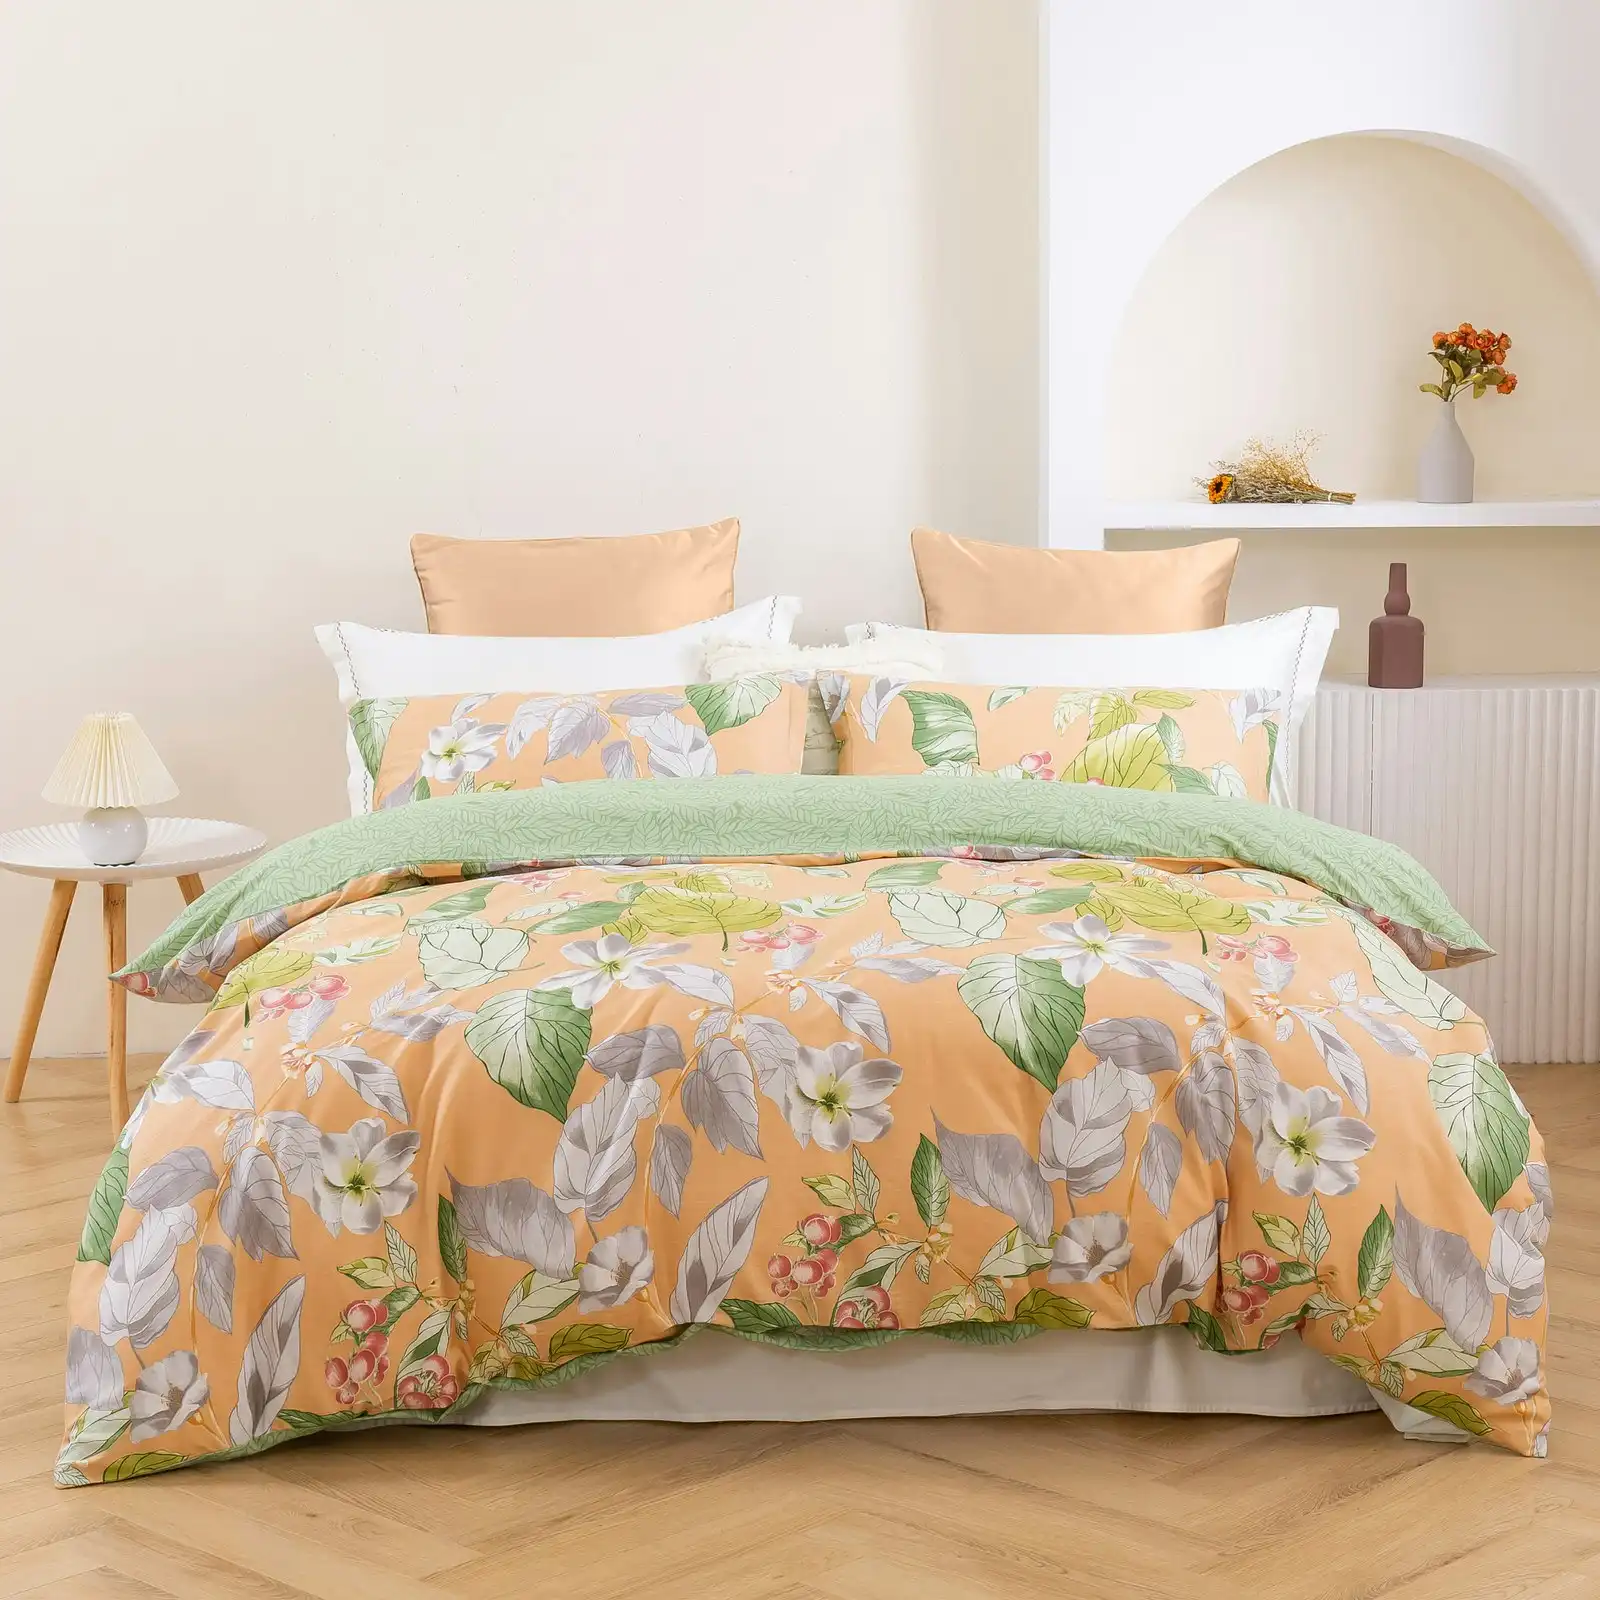 Dreamaker Peach Lily 100% Cotton Reversible Quilt Cover Set Double Bed